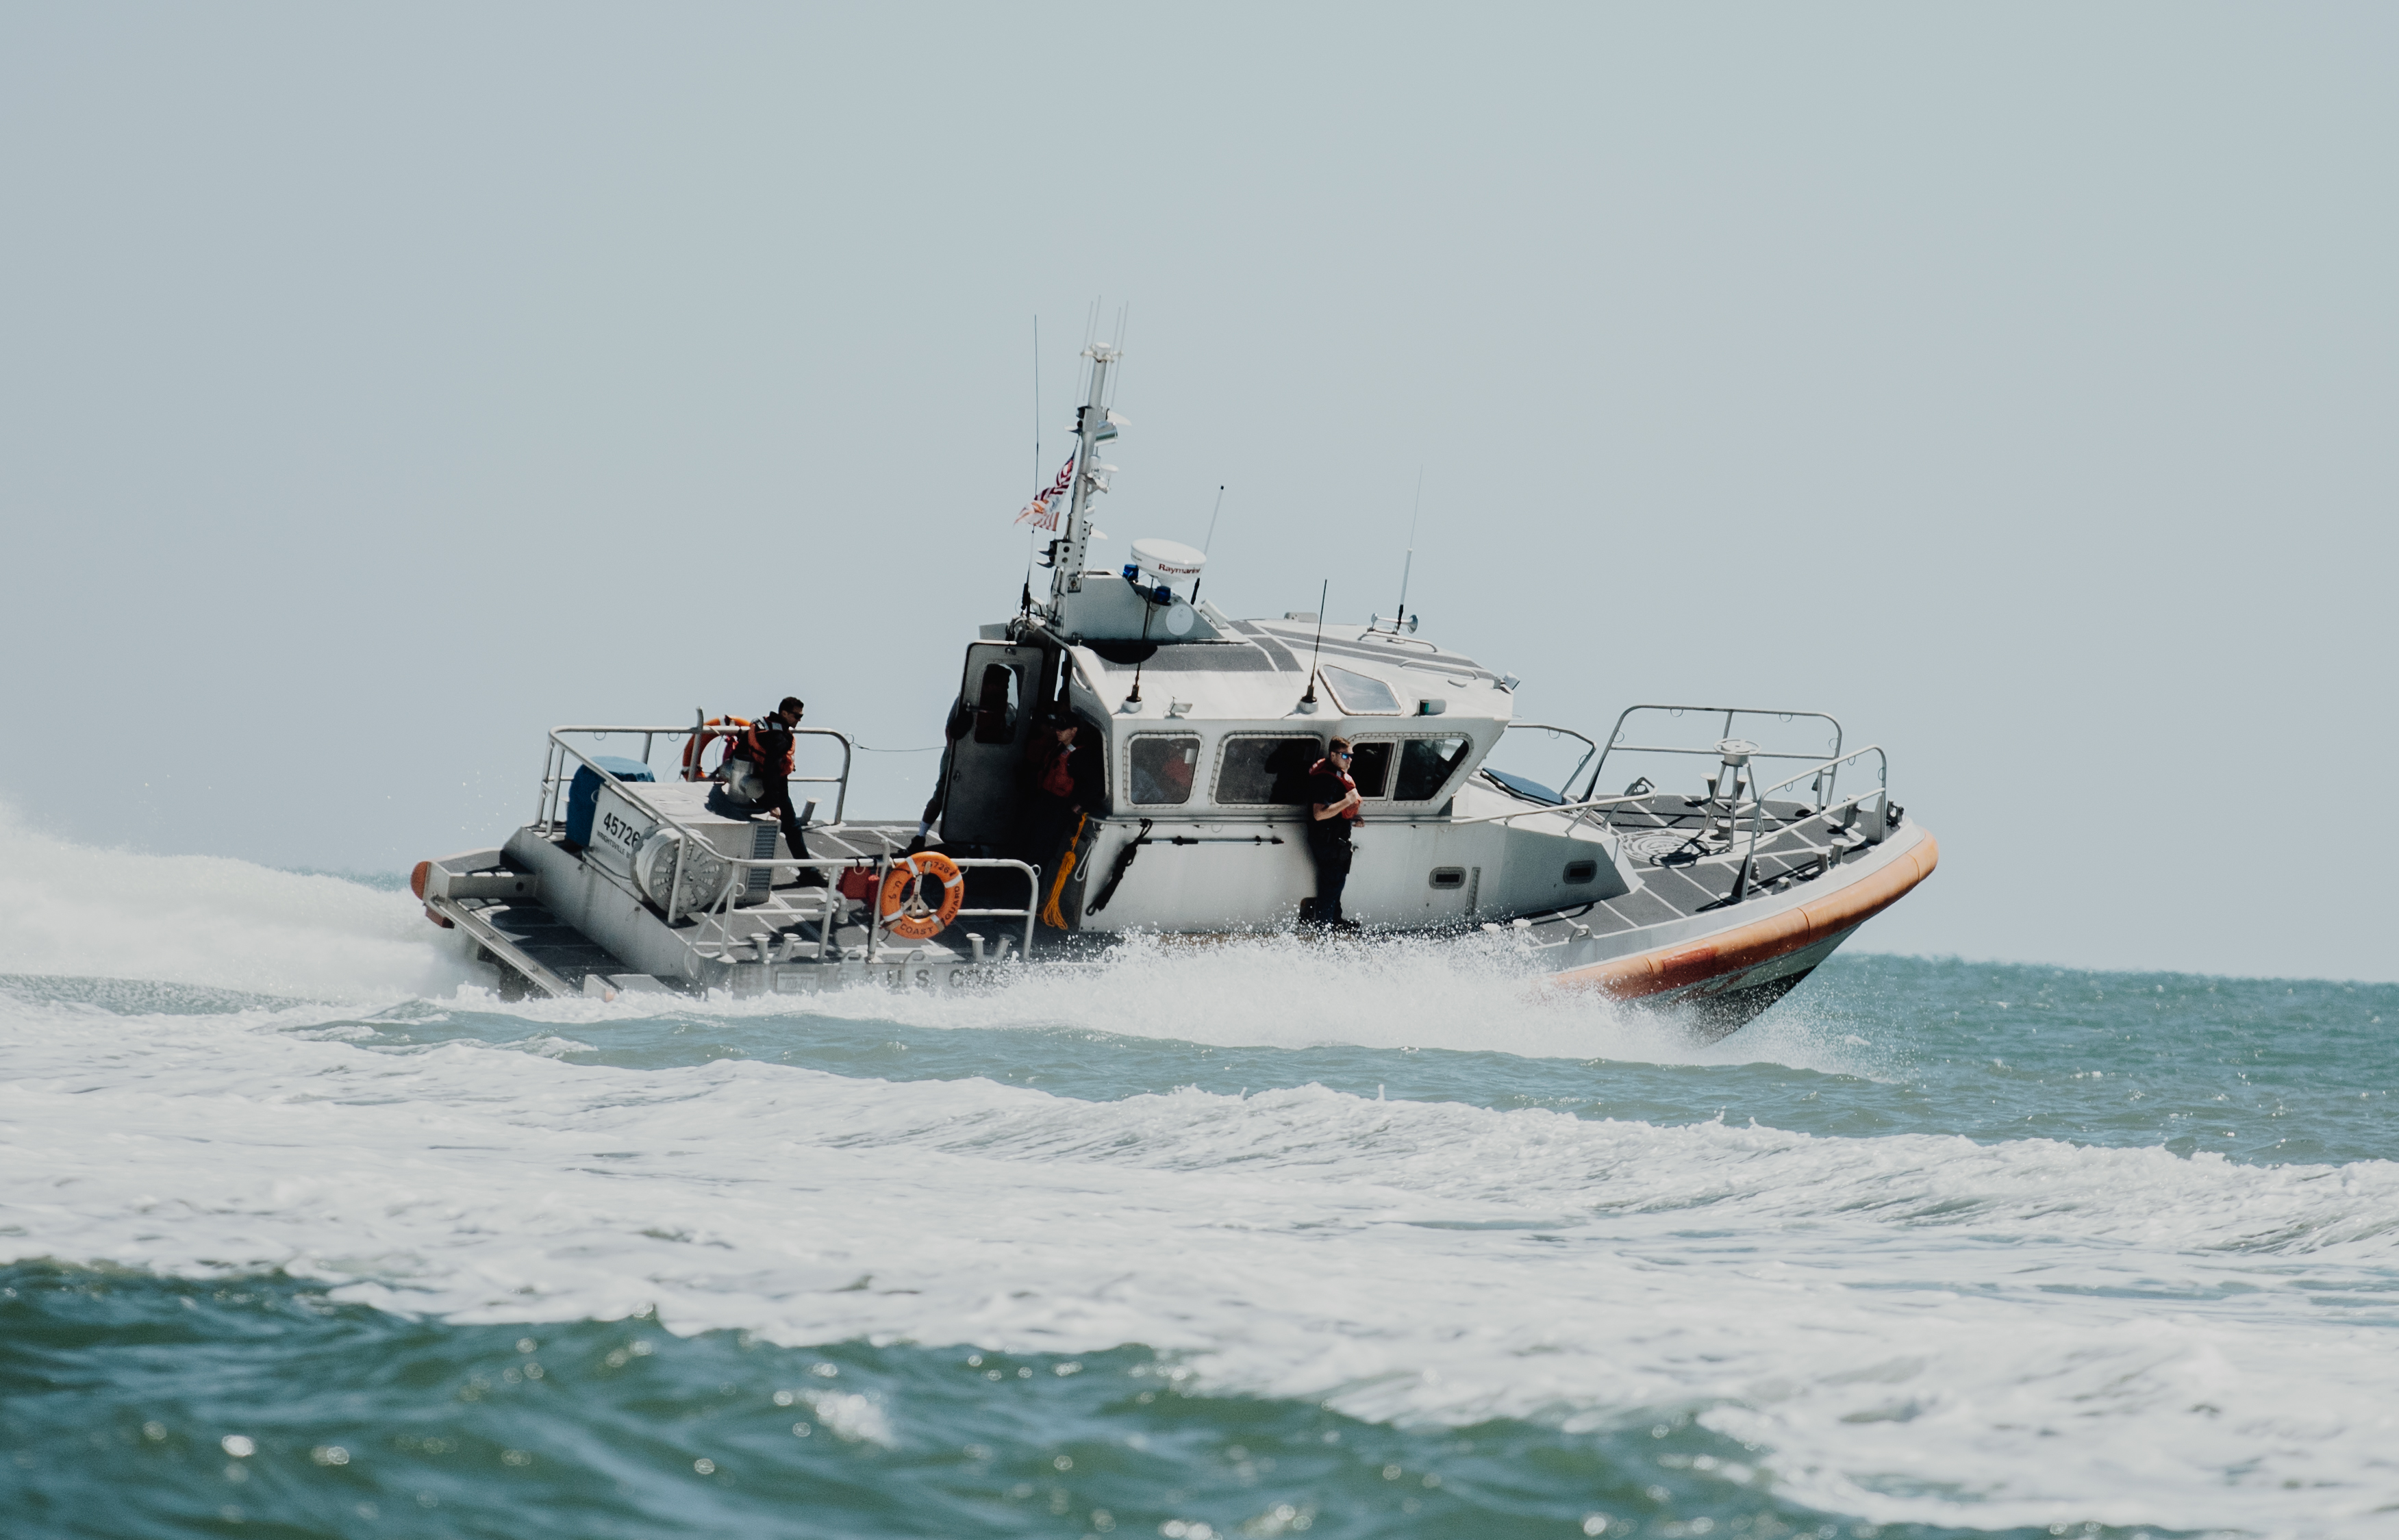 Daniel Suarez joins US Coastguard search and rescue